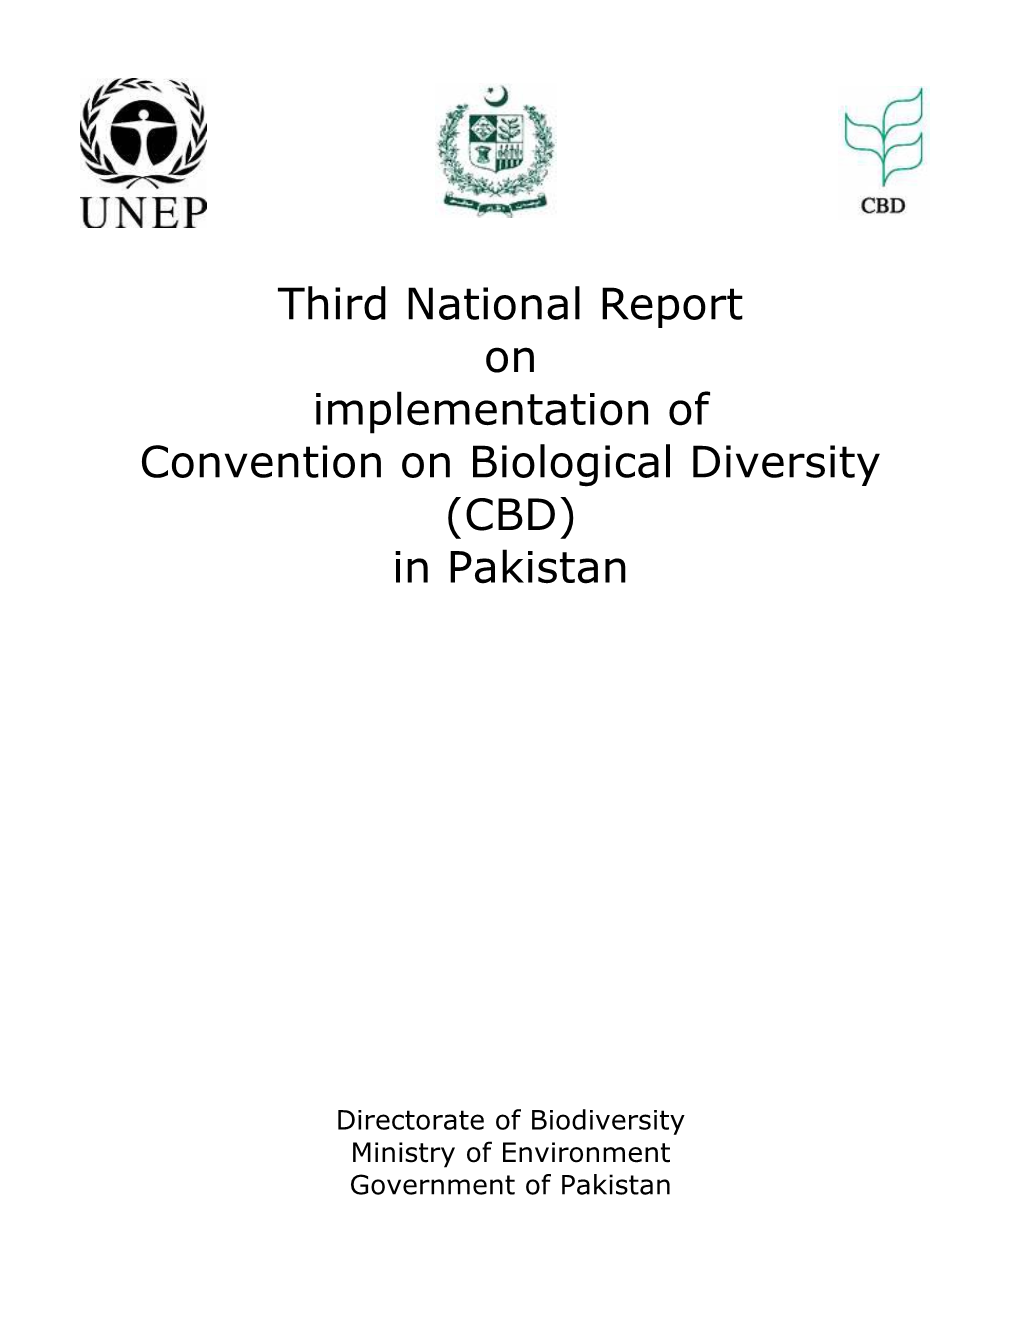 CBD Third National Report - Pakistan (English Version)